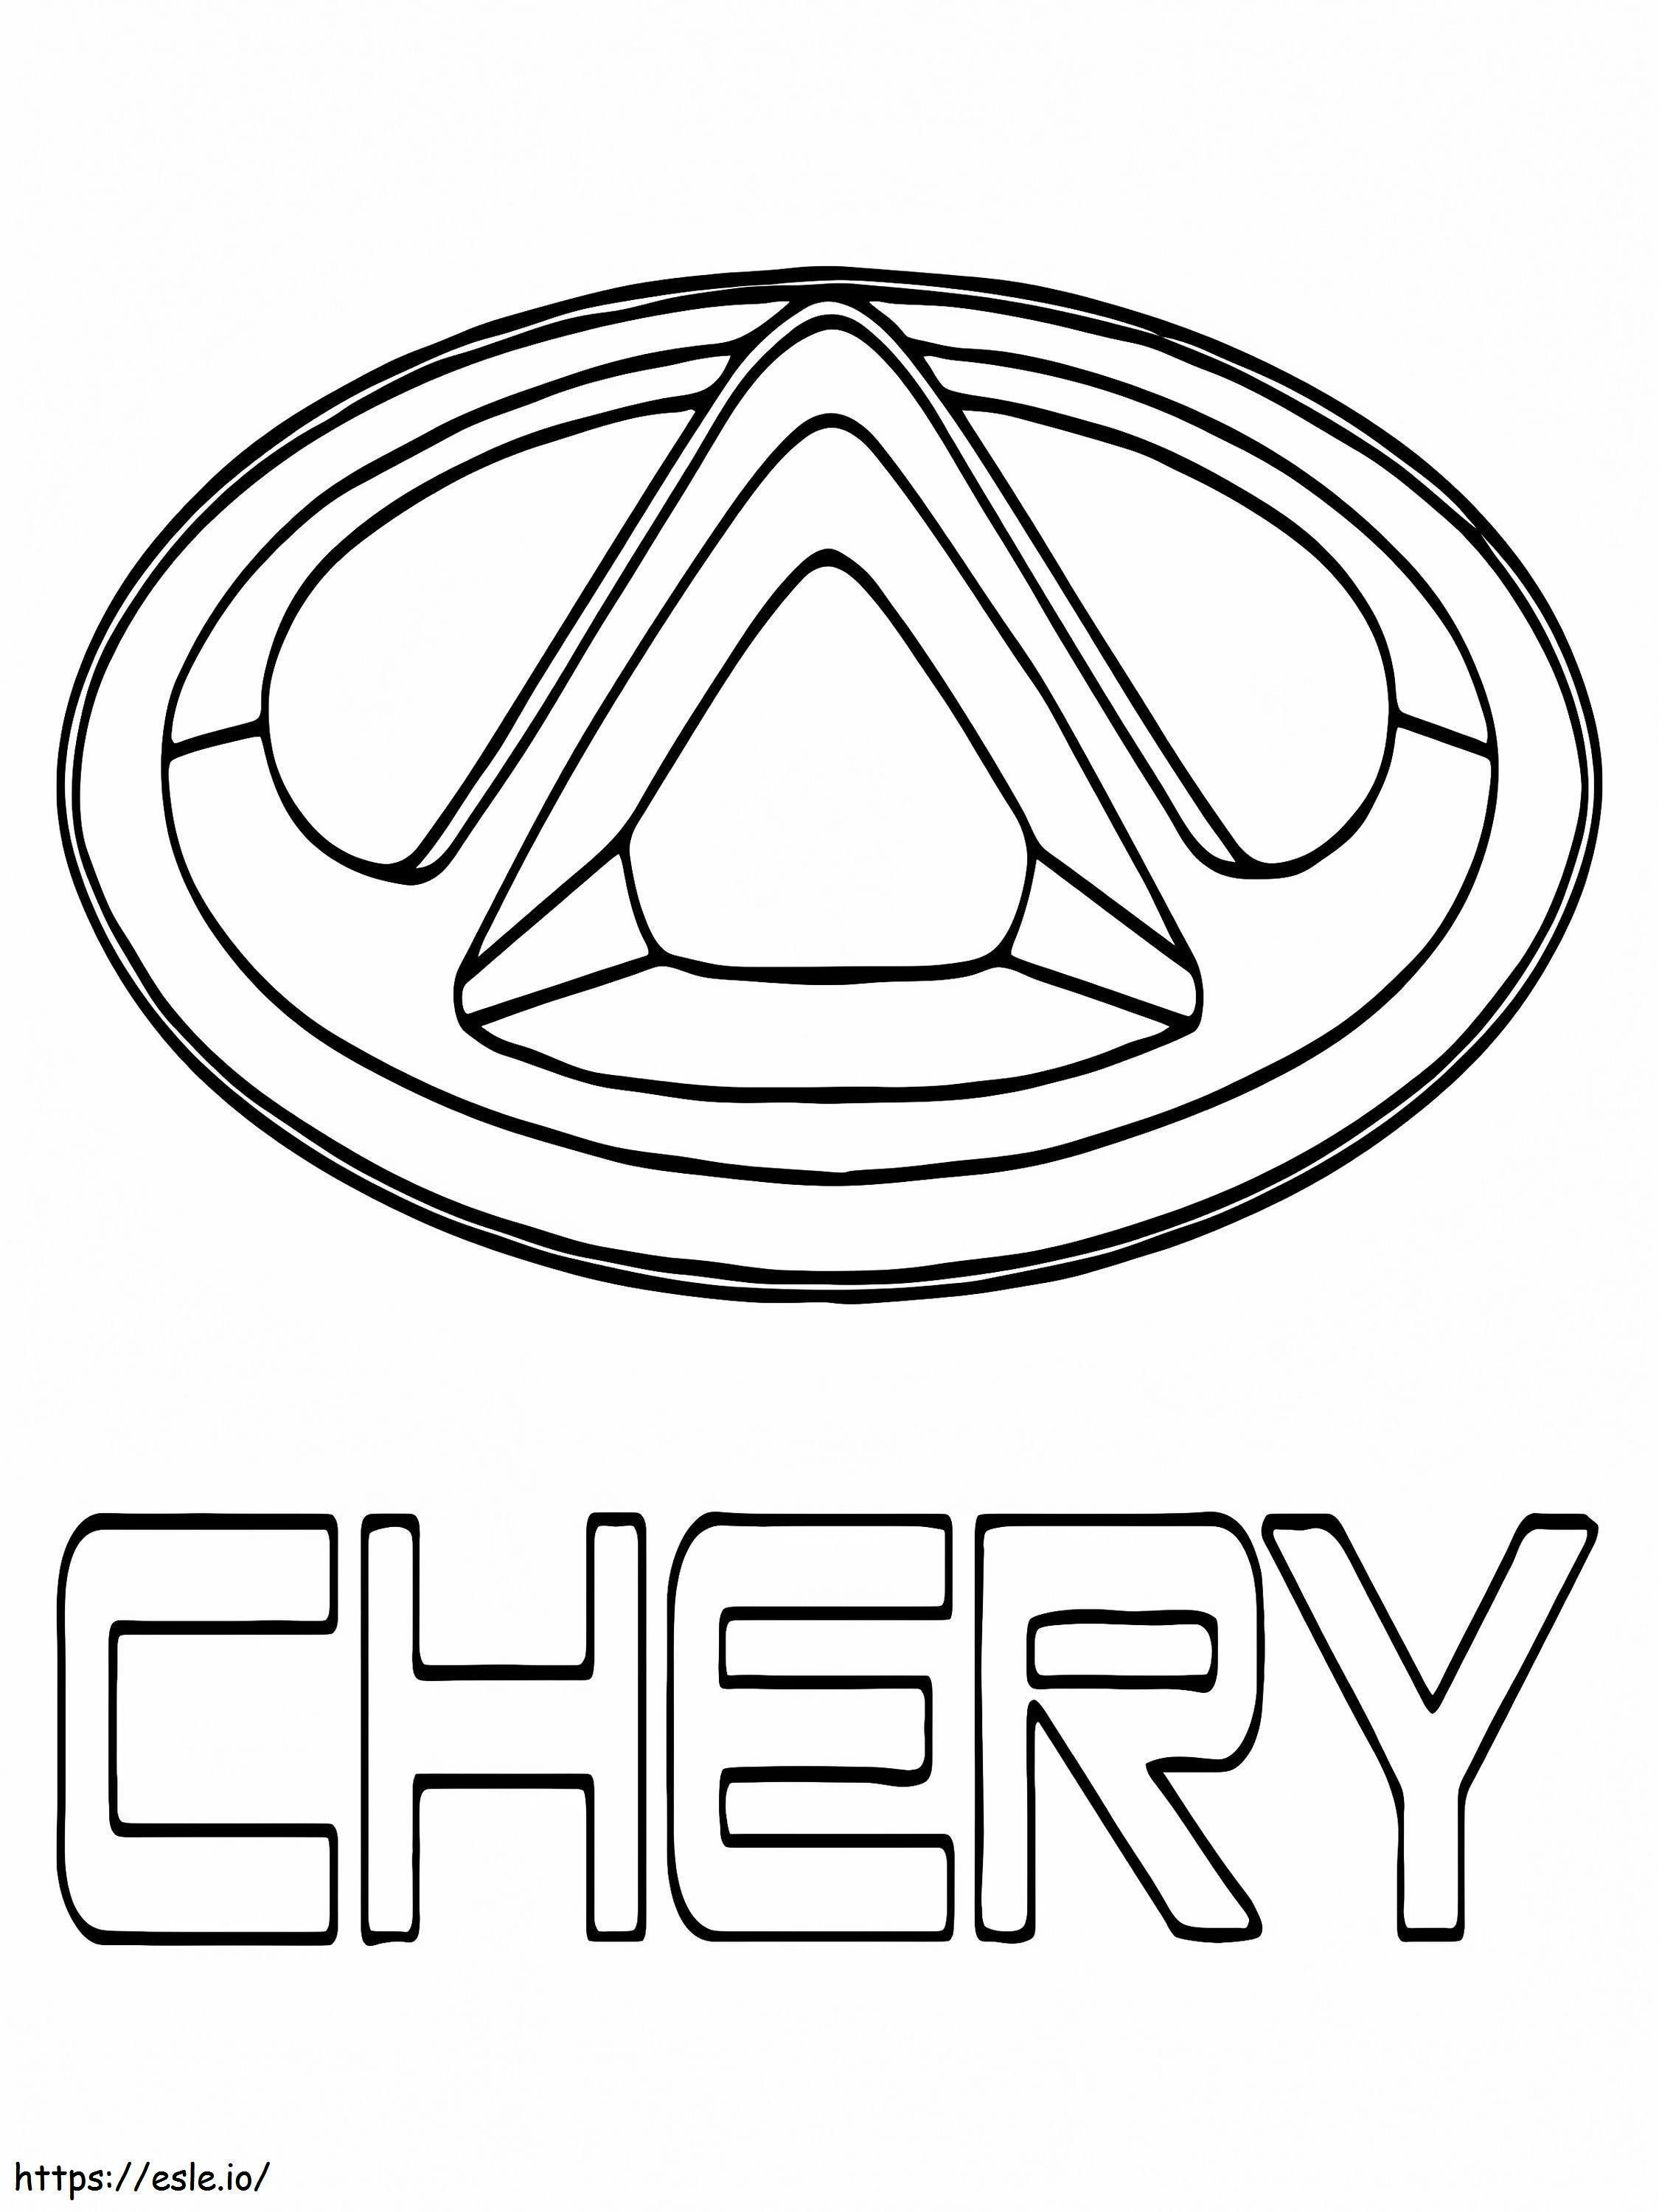 Logotipo Del Coche Chery para colorear